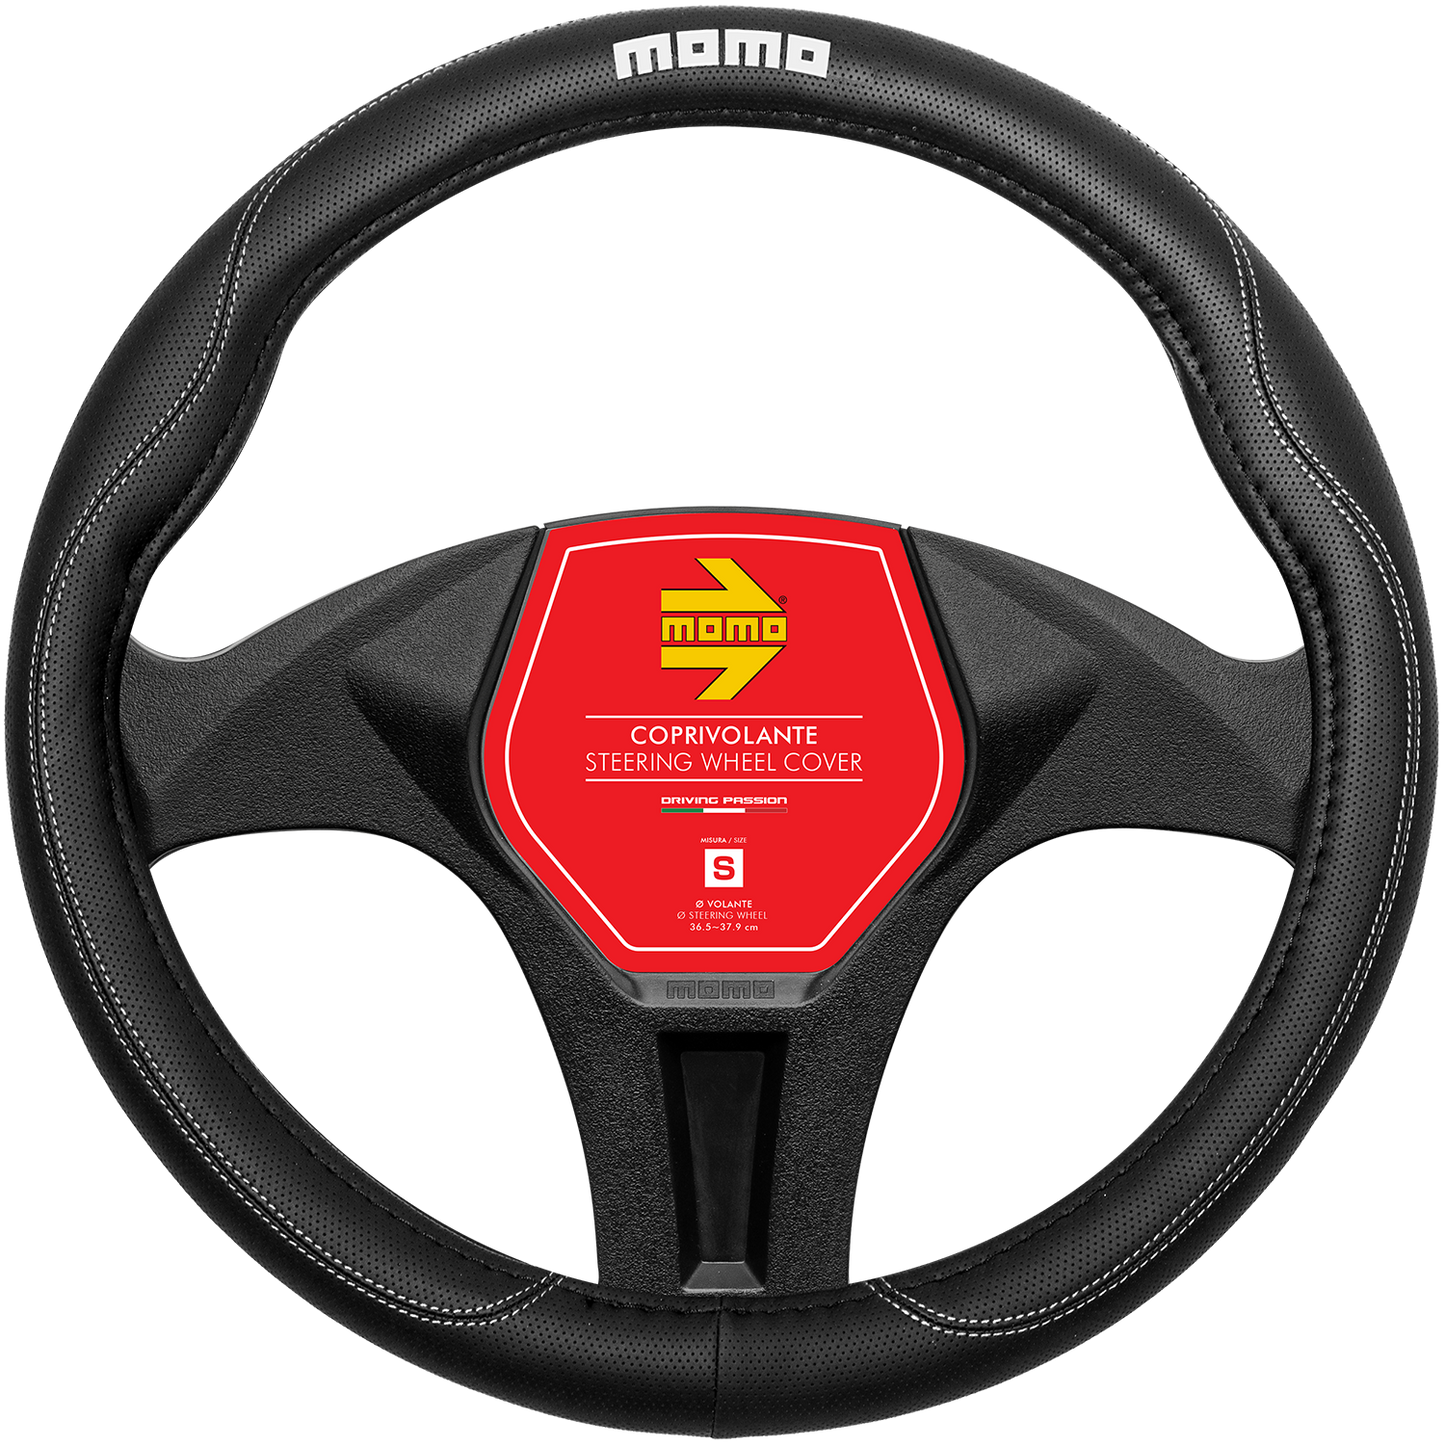 Momo Steering Wheel Cover - COMFORT - BLACK/WHITE PU - SIZE S